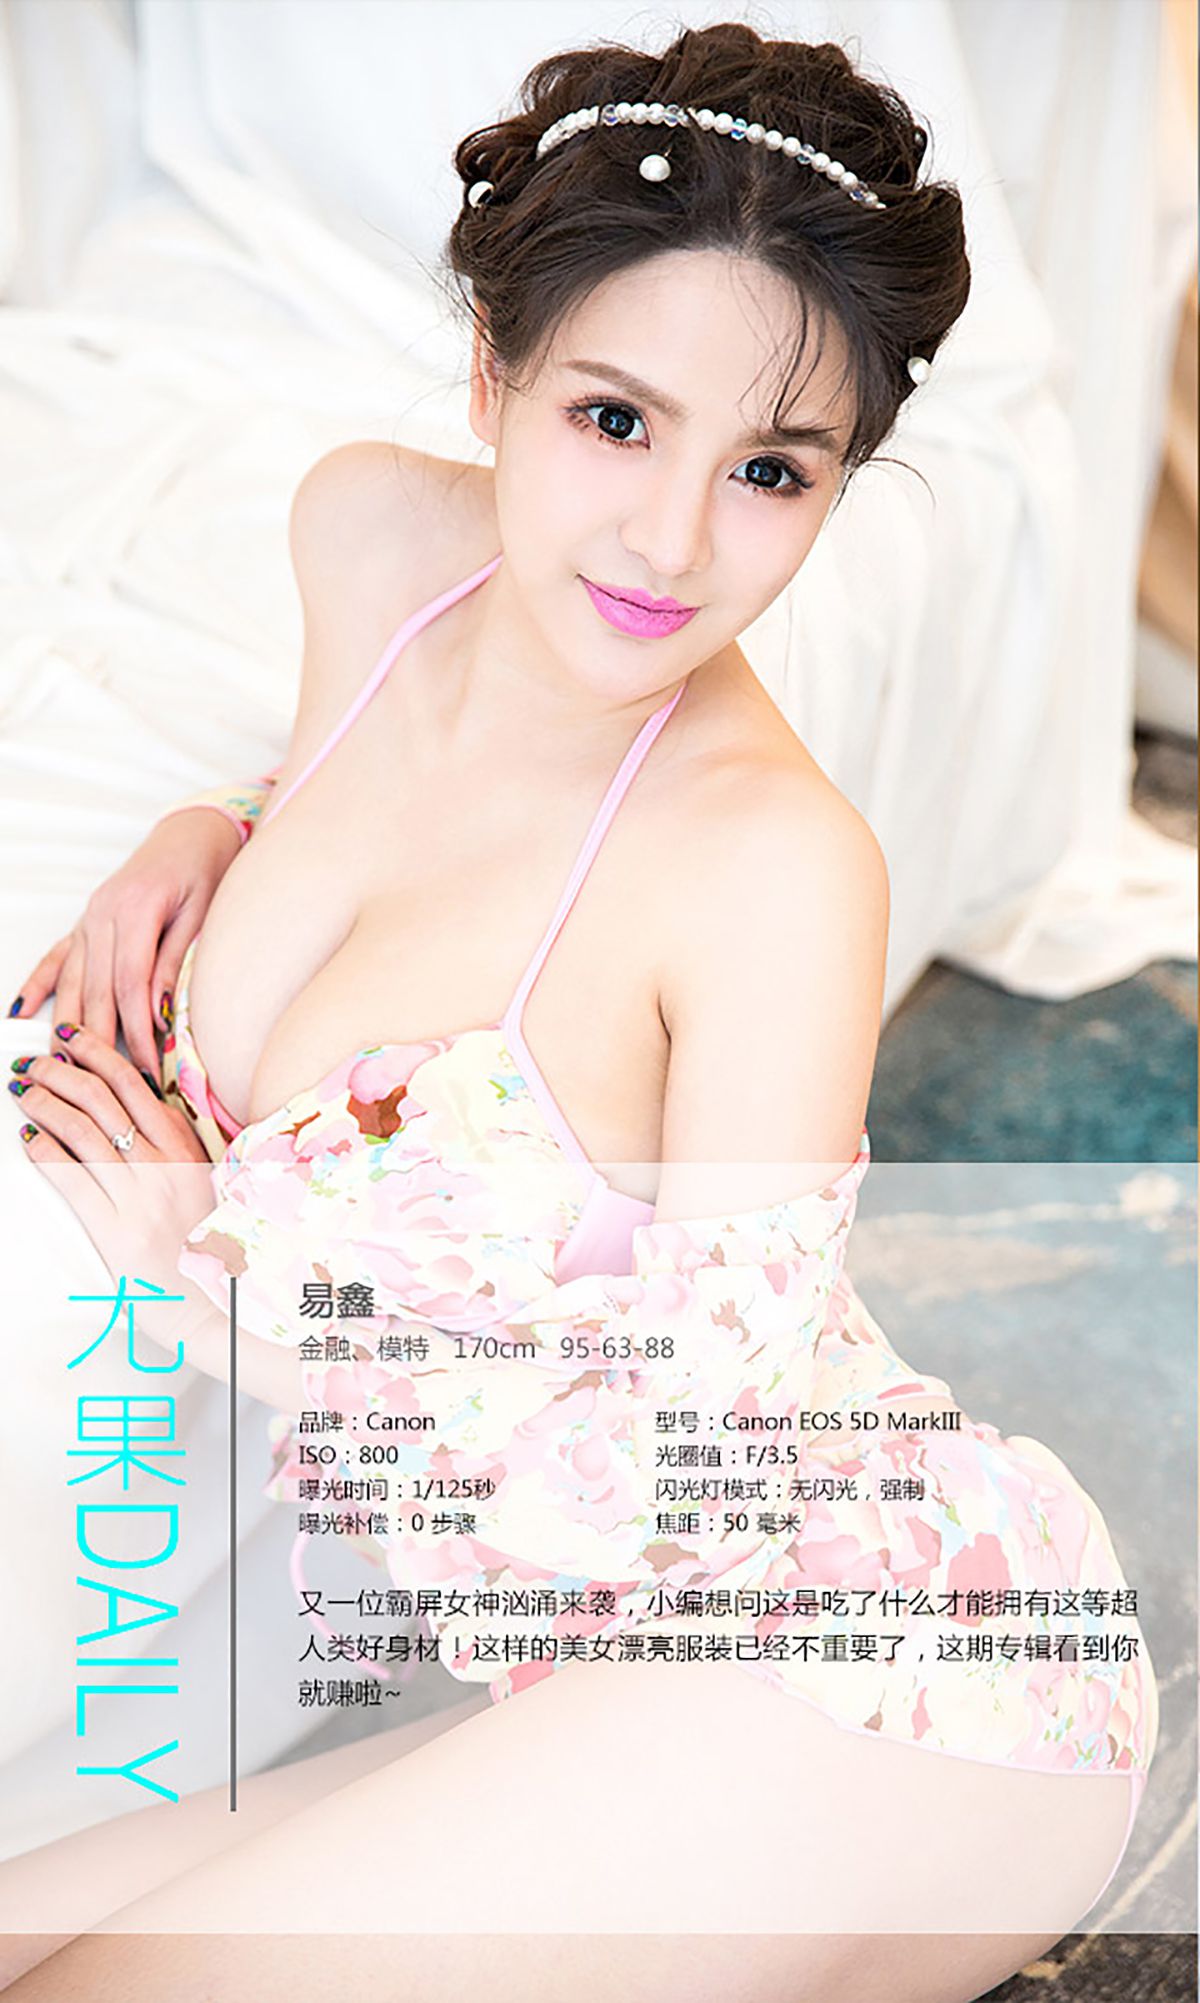 Yi Xin’s “36D Goddess of Heaven” [爱尤物Ugirls] No.293 Photo Album